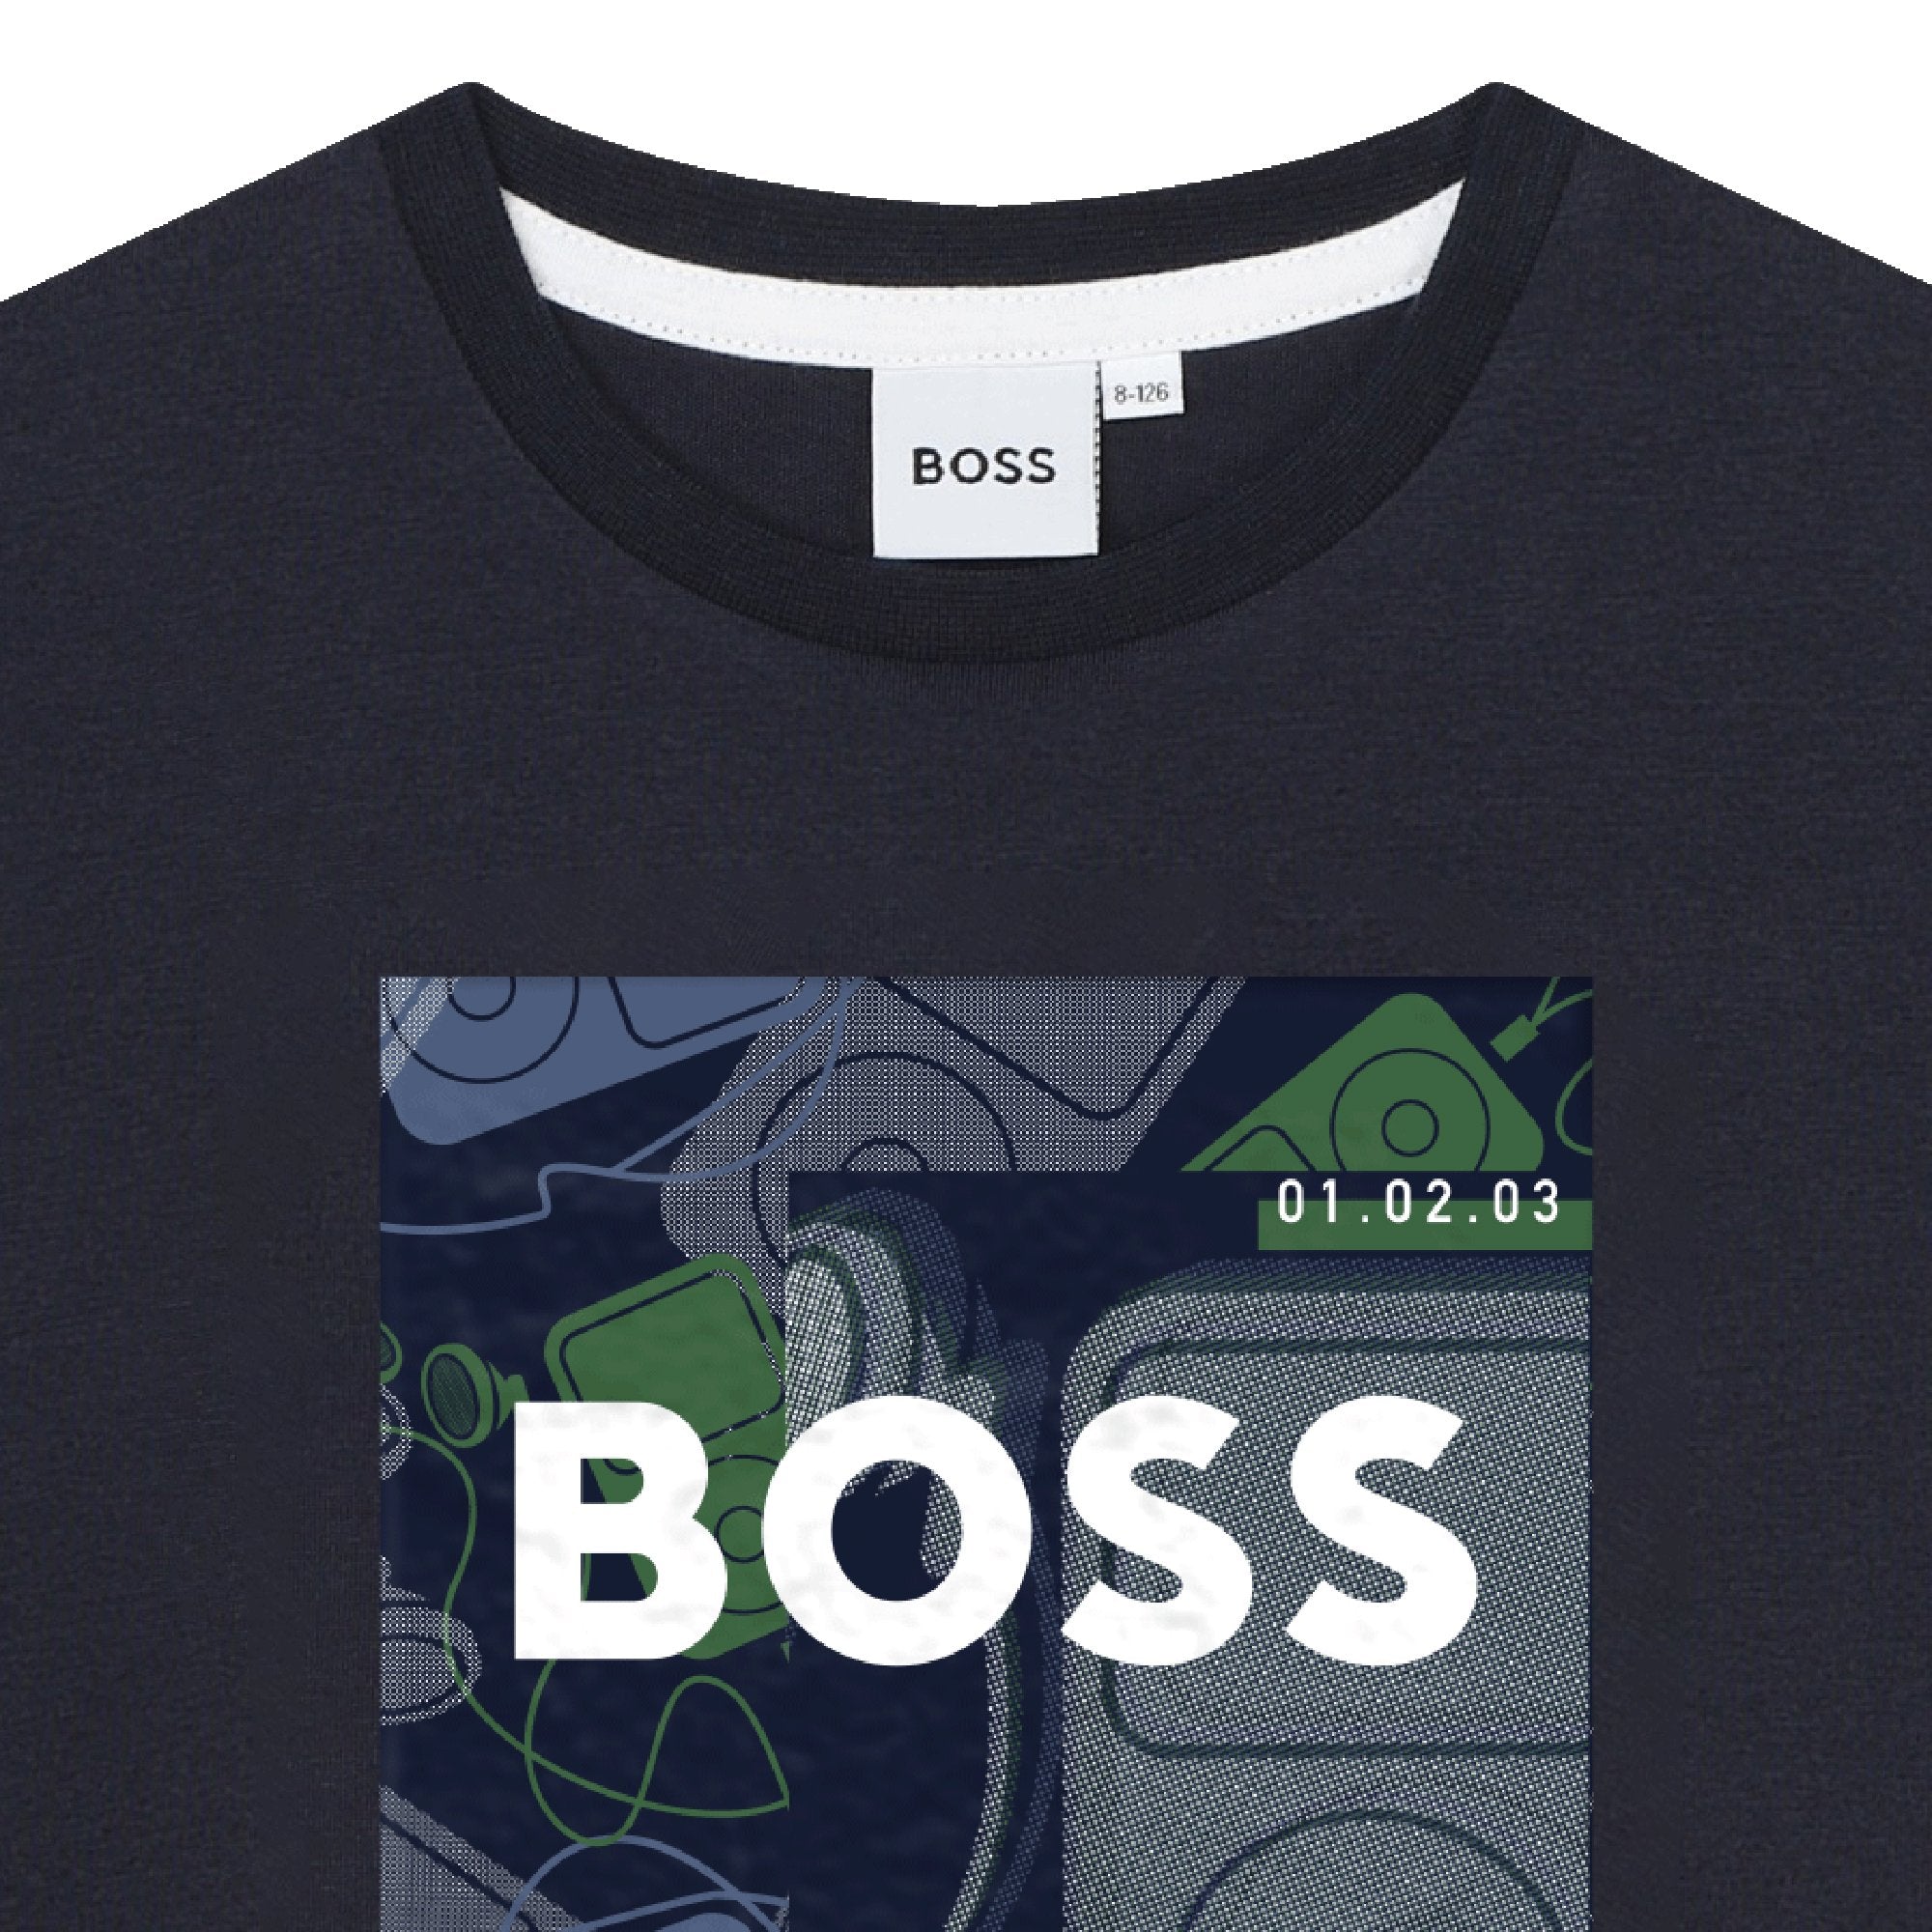 Hugo Boss Navy iPod T-Shirt